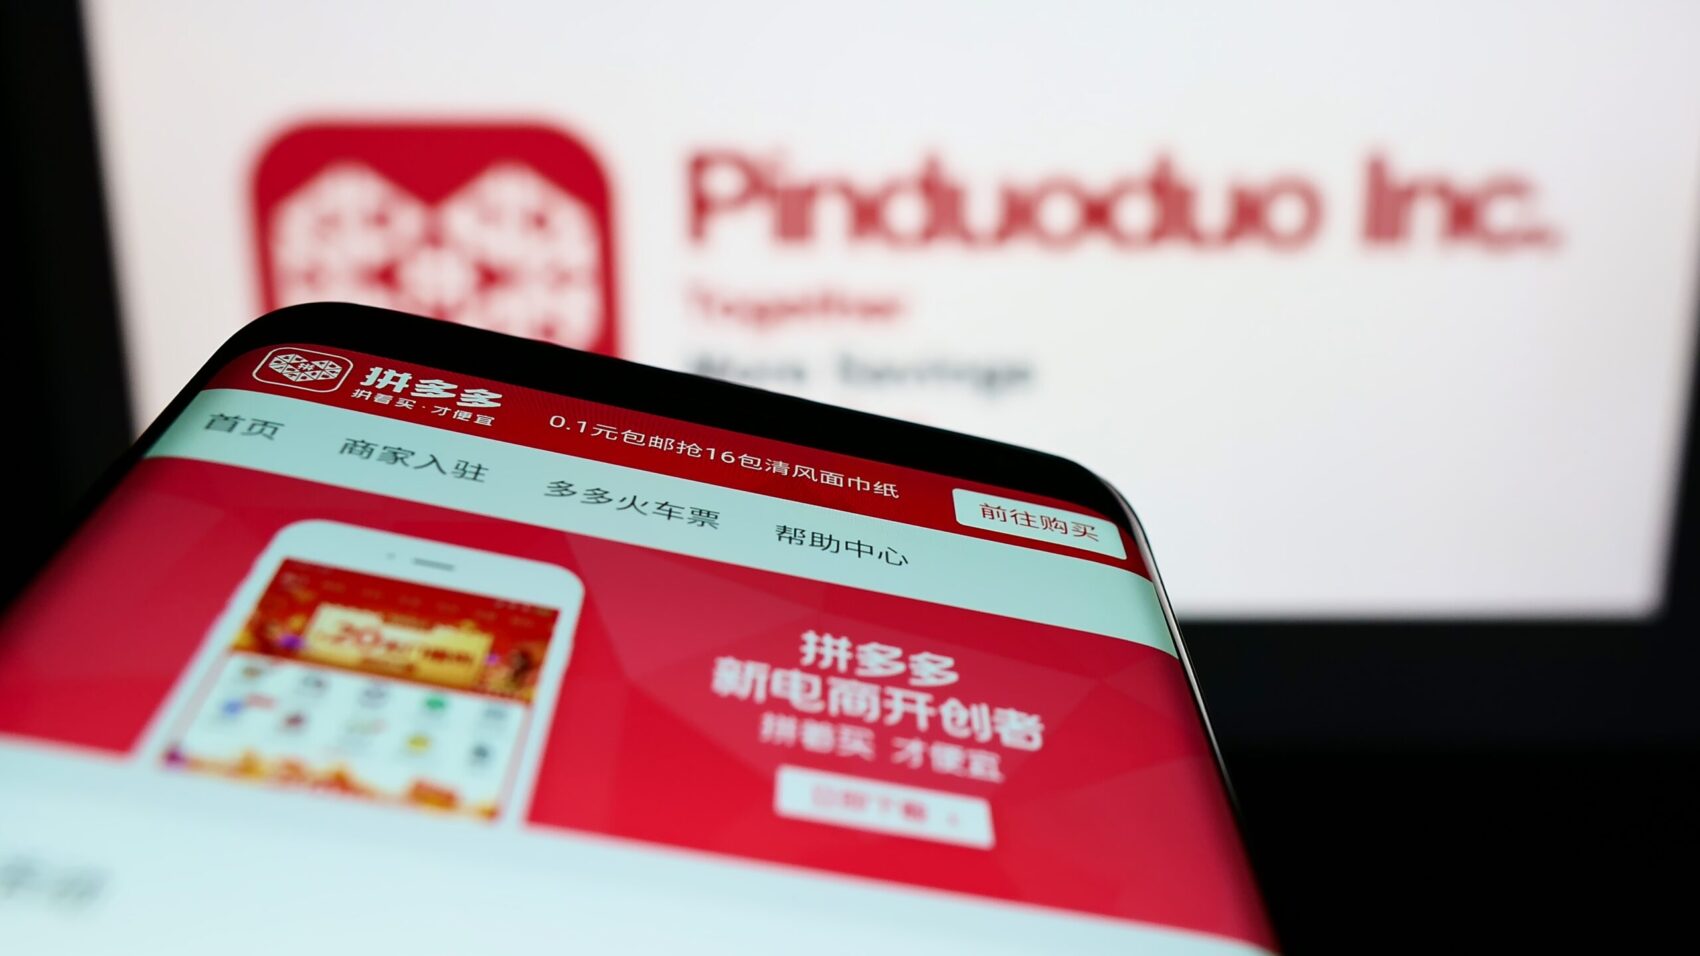 Pinduoduo making strides outside China